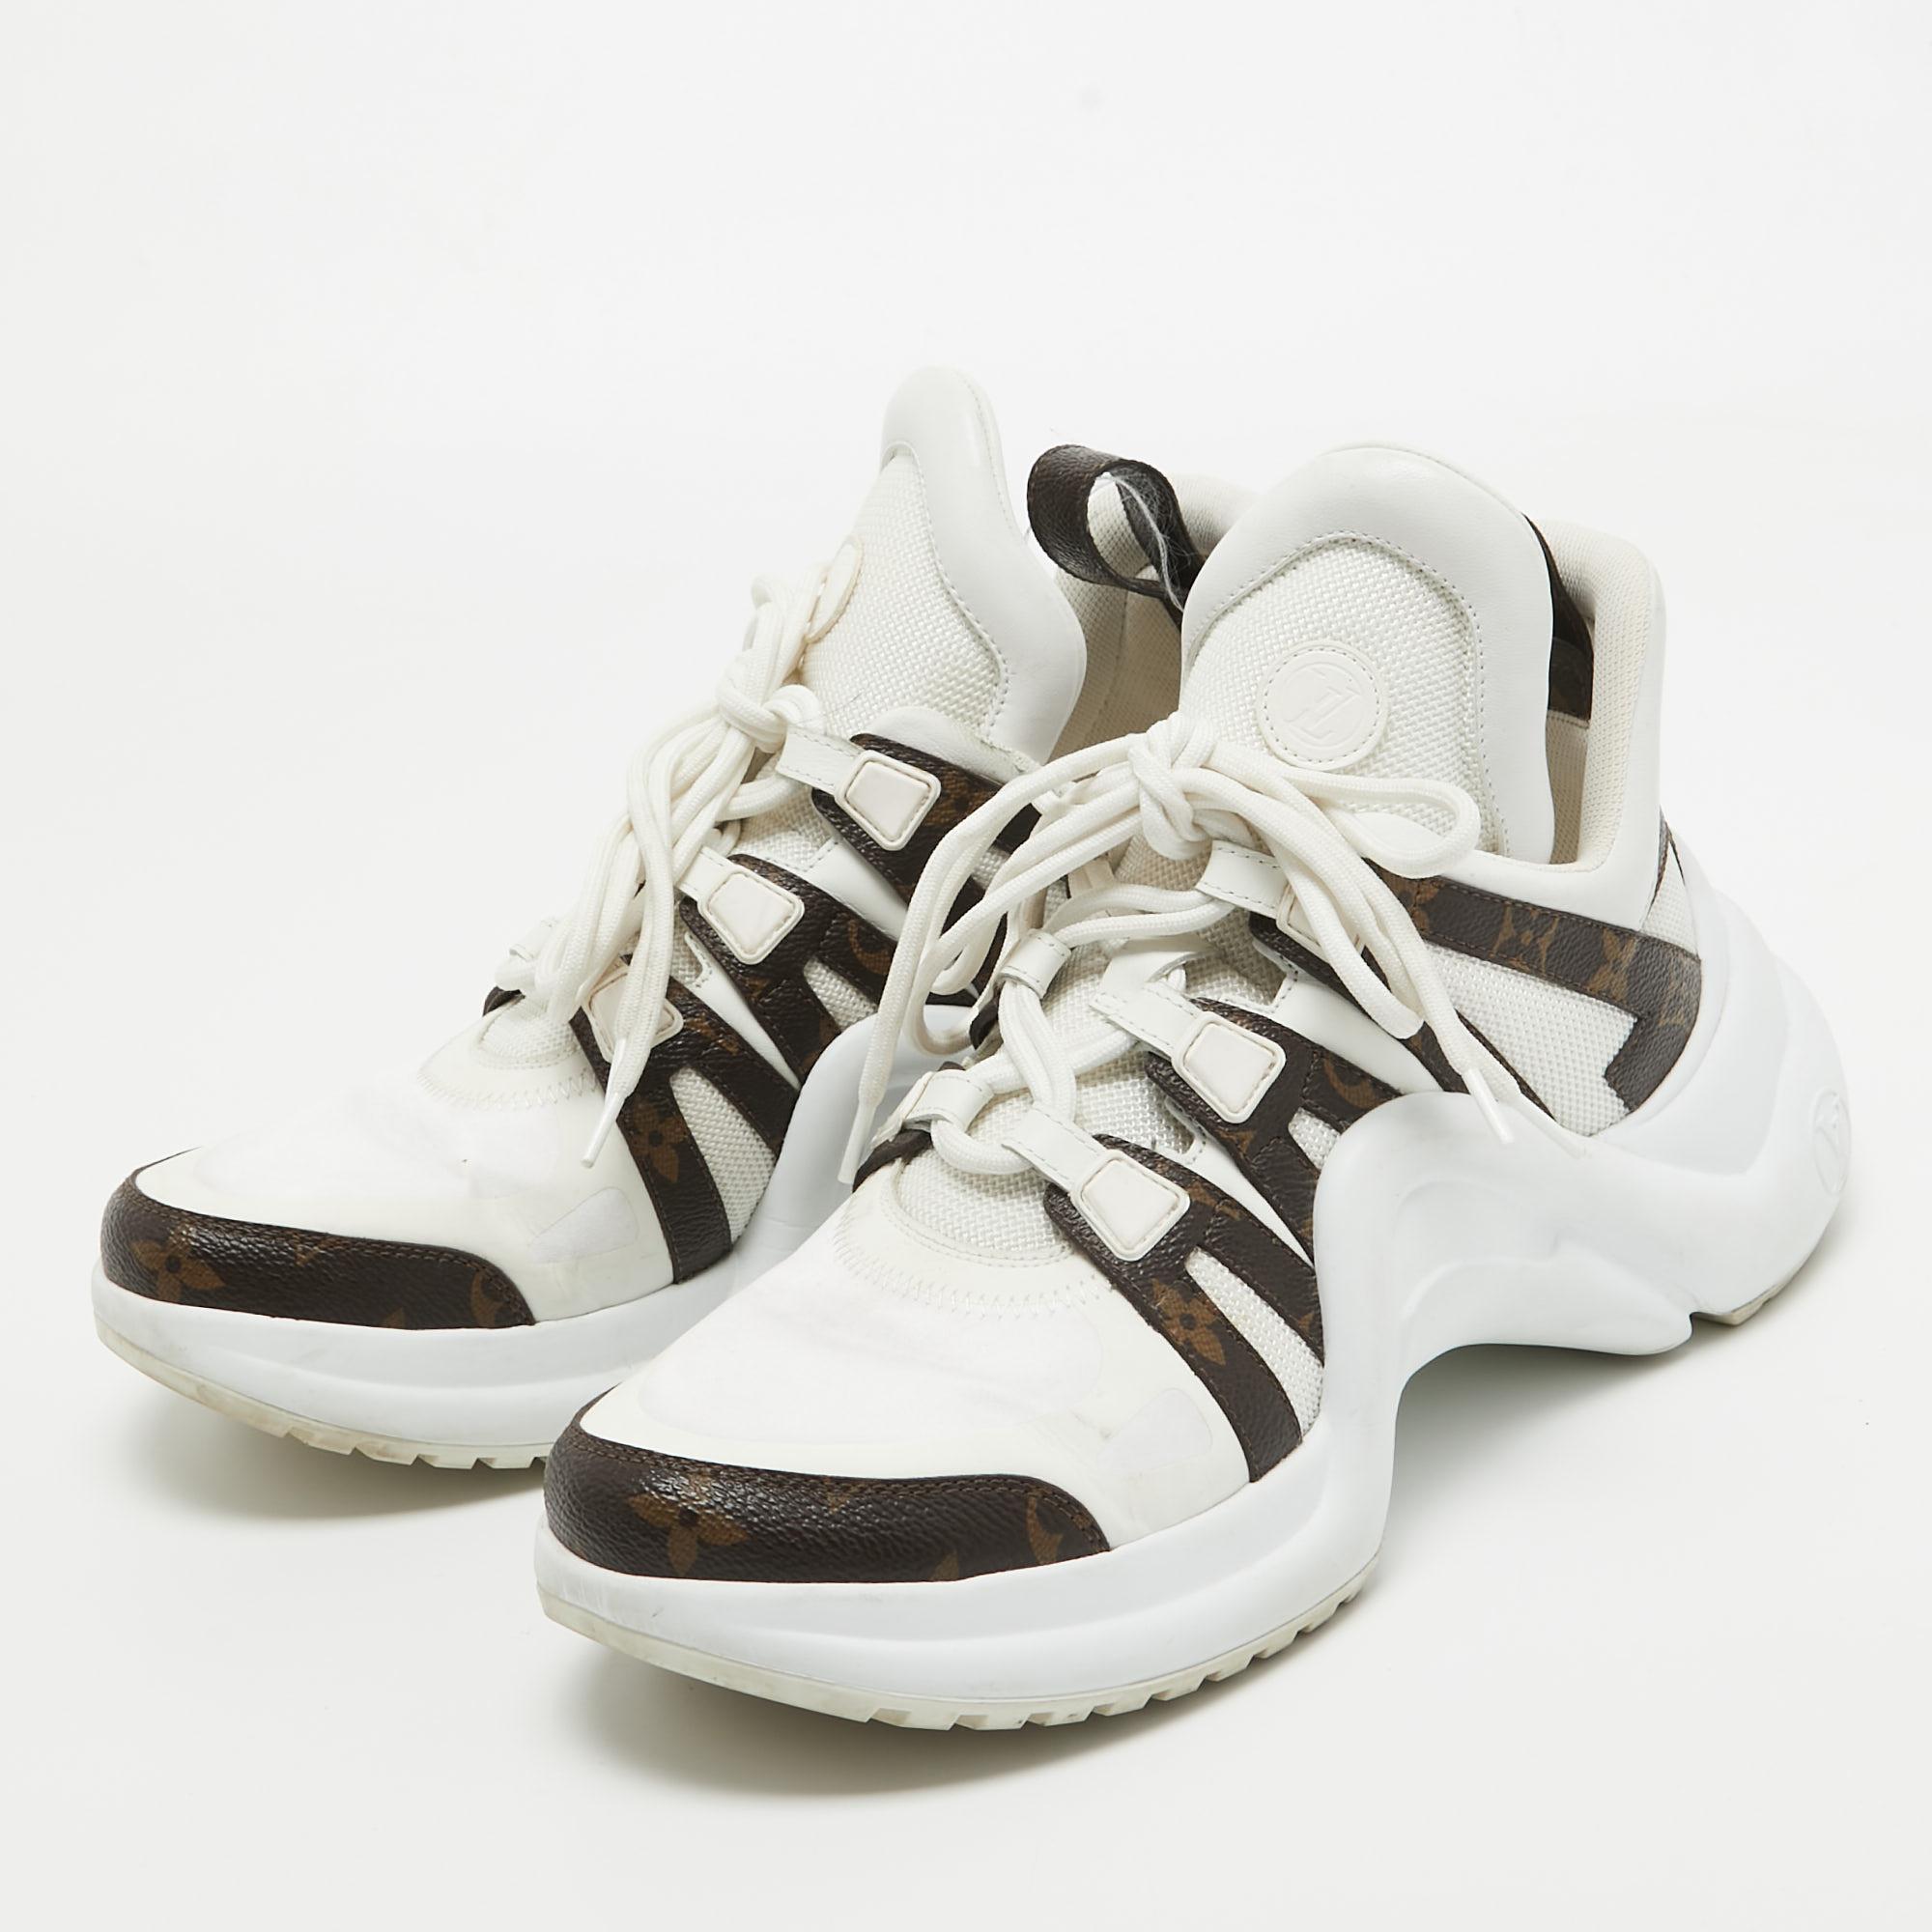 Louis Vuitton White/Brown Nylon and Monogram Canvas Archlight Sneakers Size 41 1